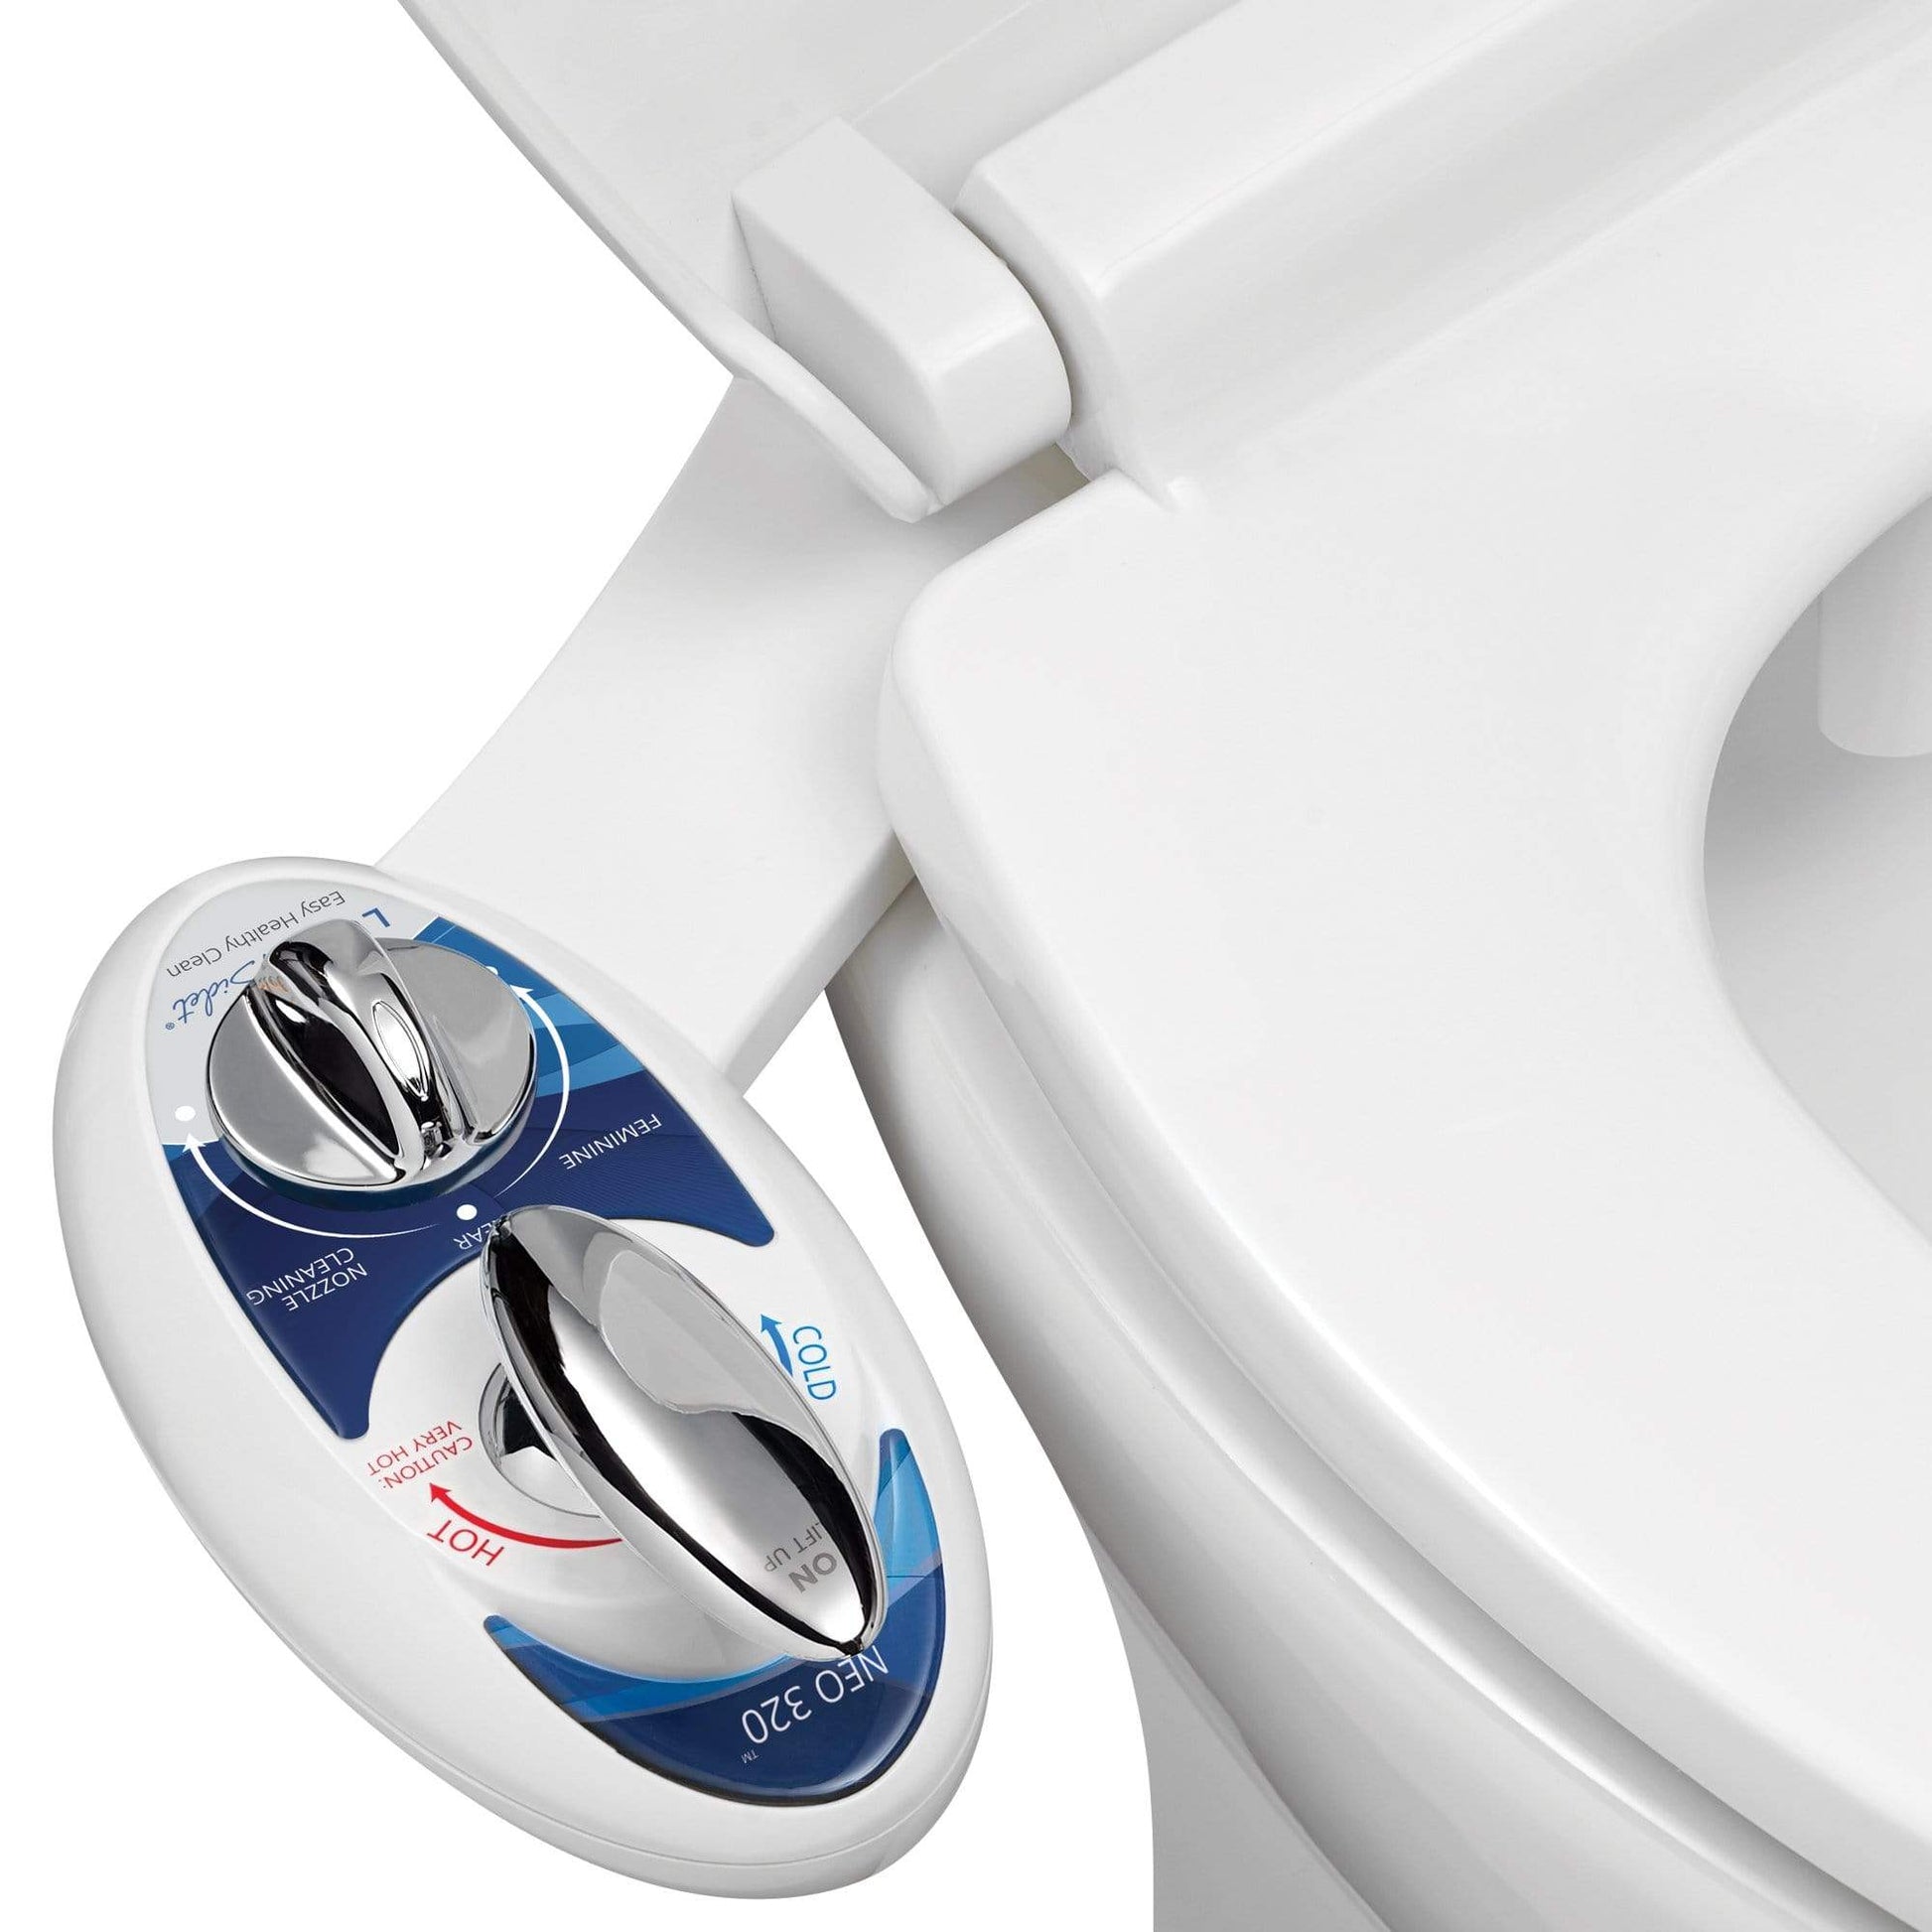 Comfort Non-Electric Bidet Toilet Seat Attachment with Nozzle Adjuster in  White